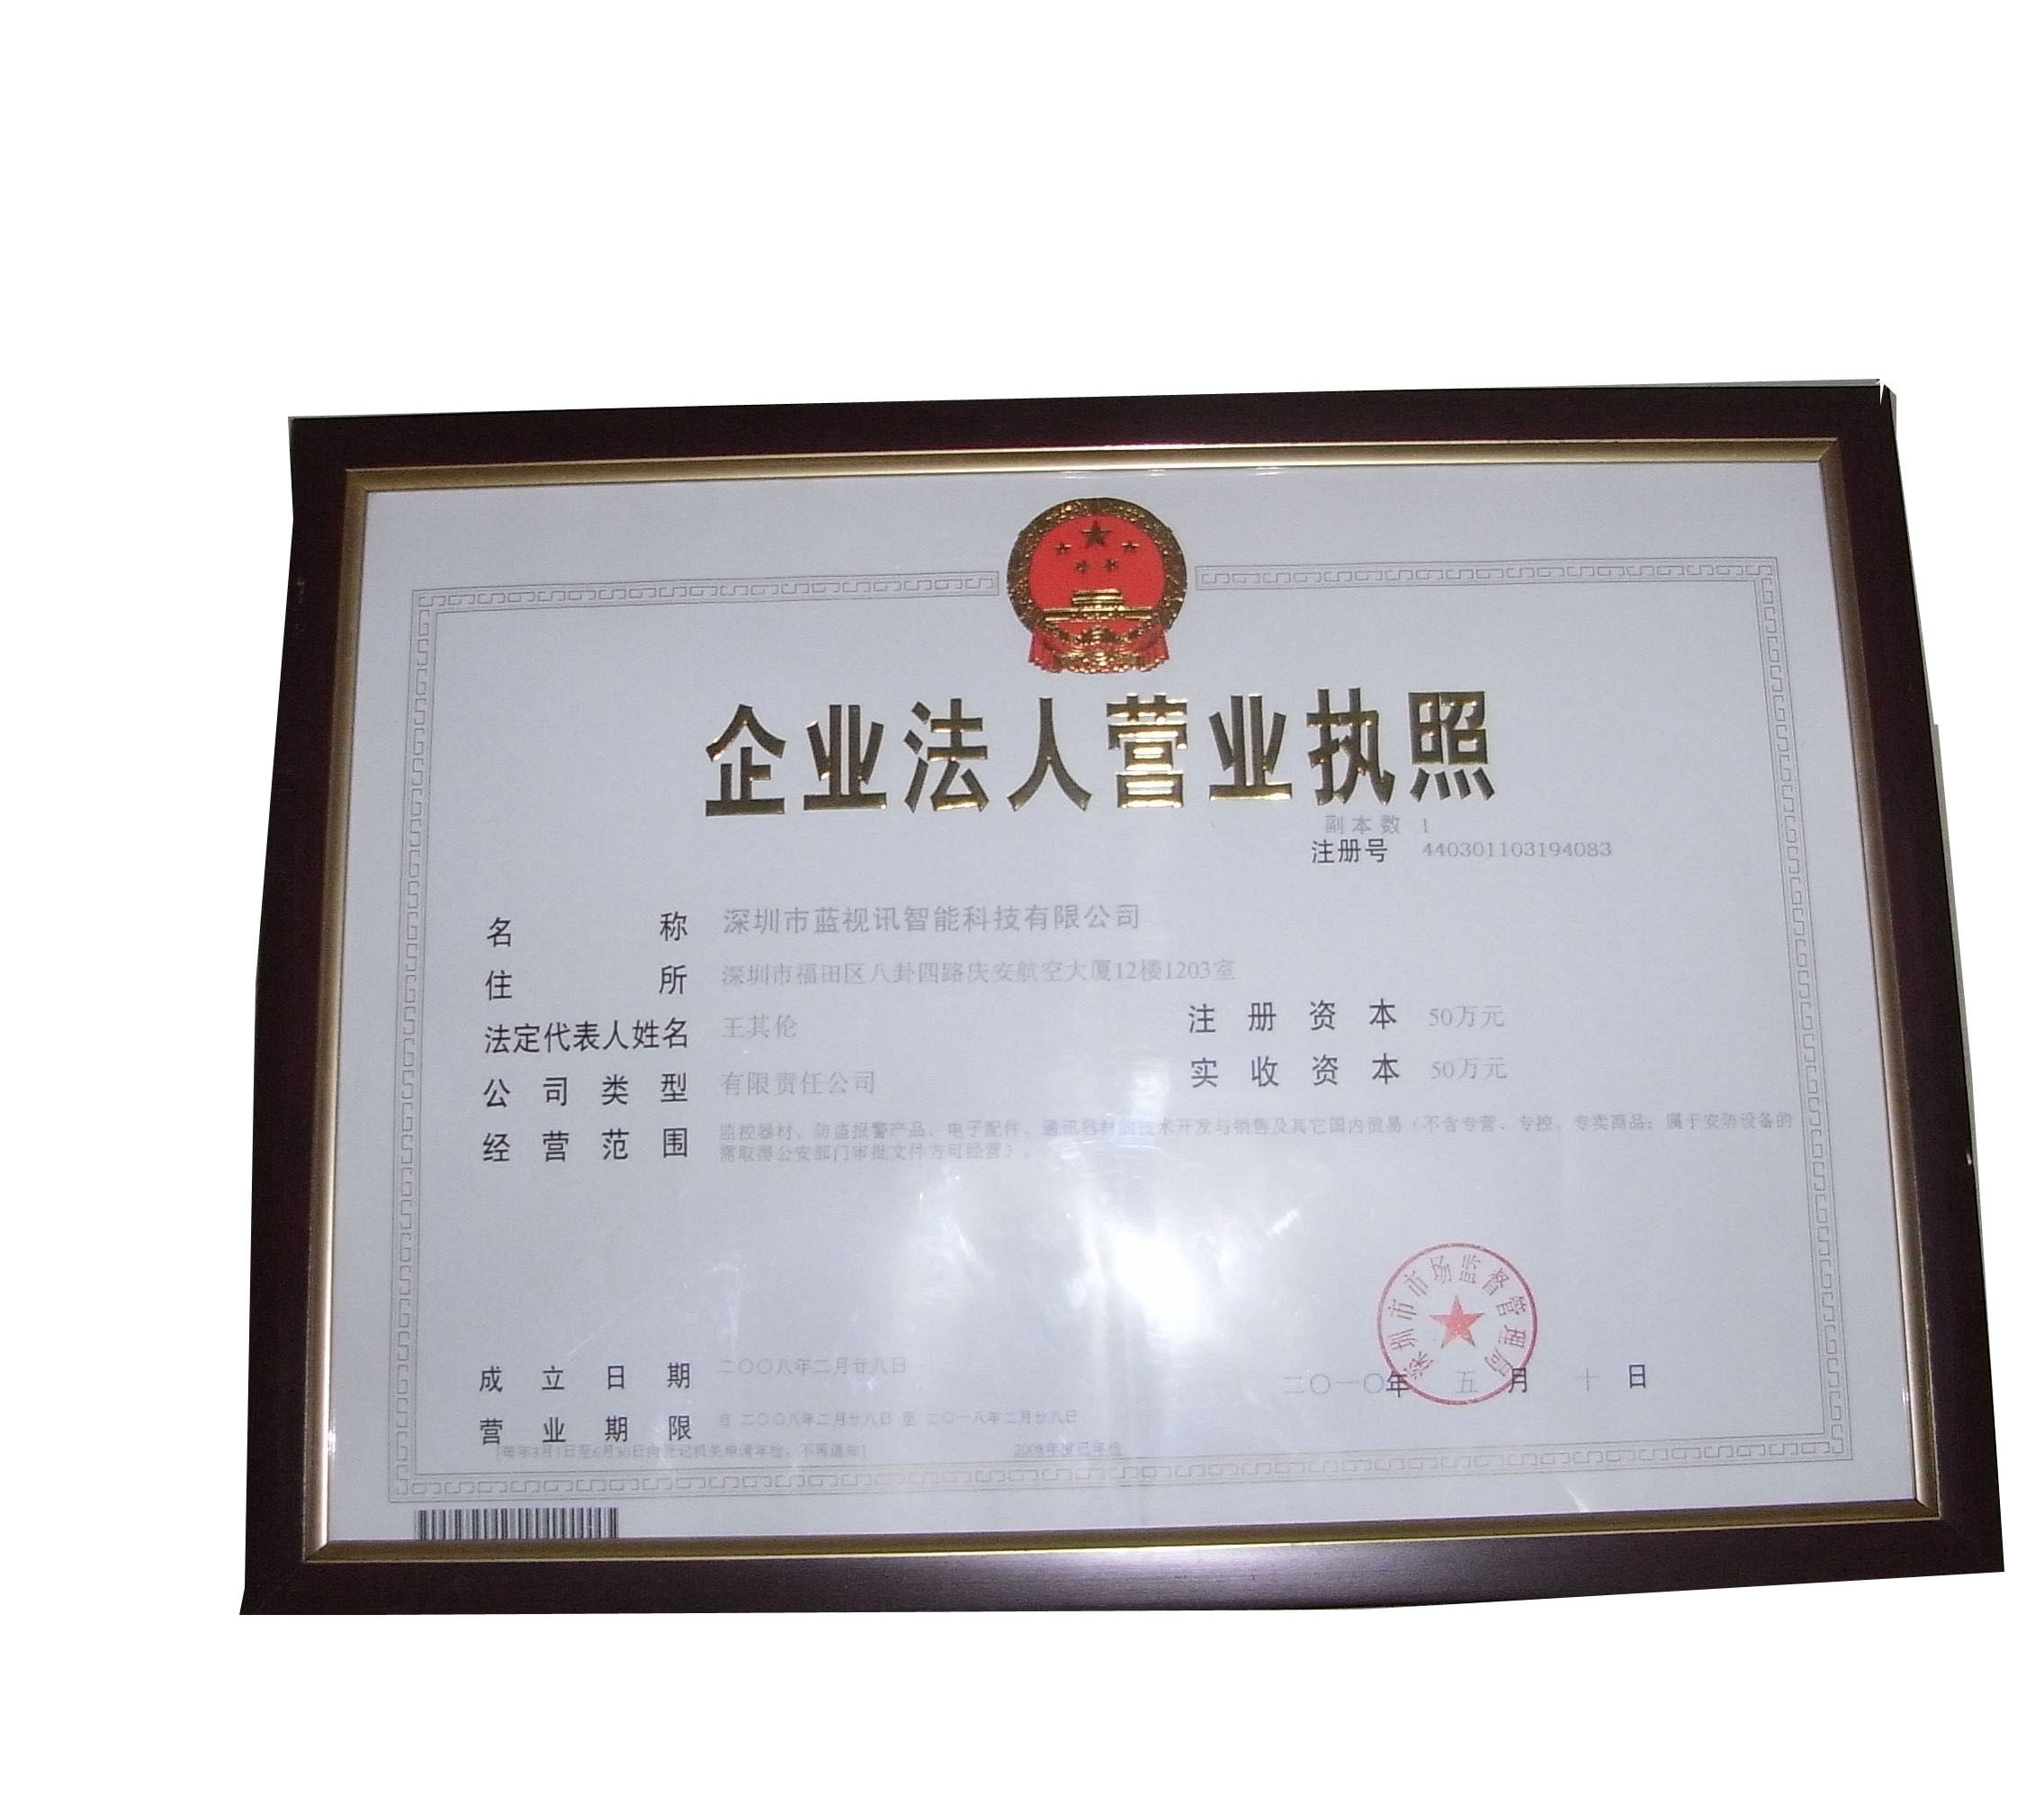 Auspicious Dragon Polishing Materials Co.,LTD Certifications